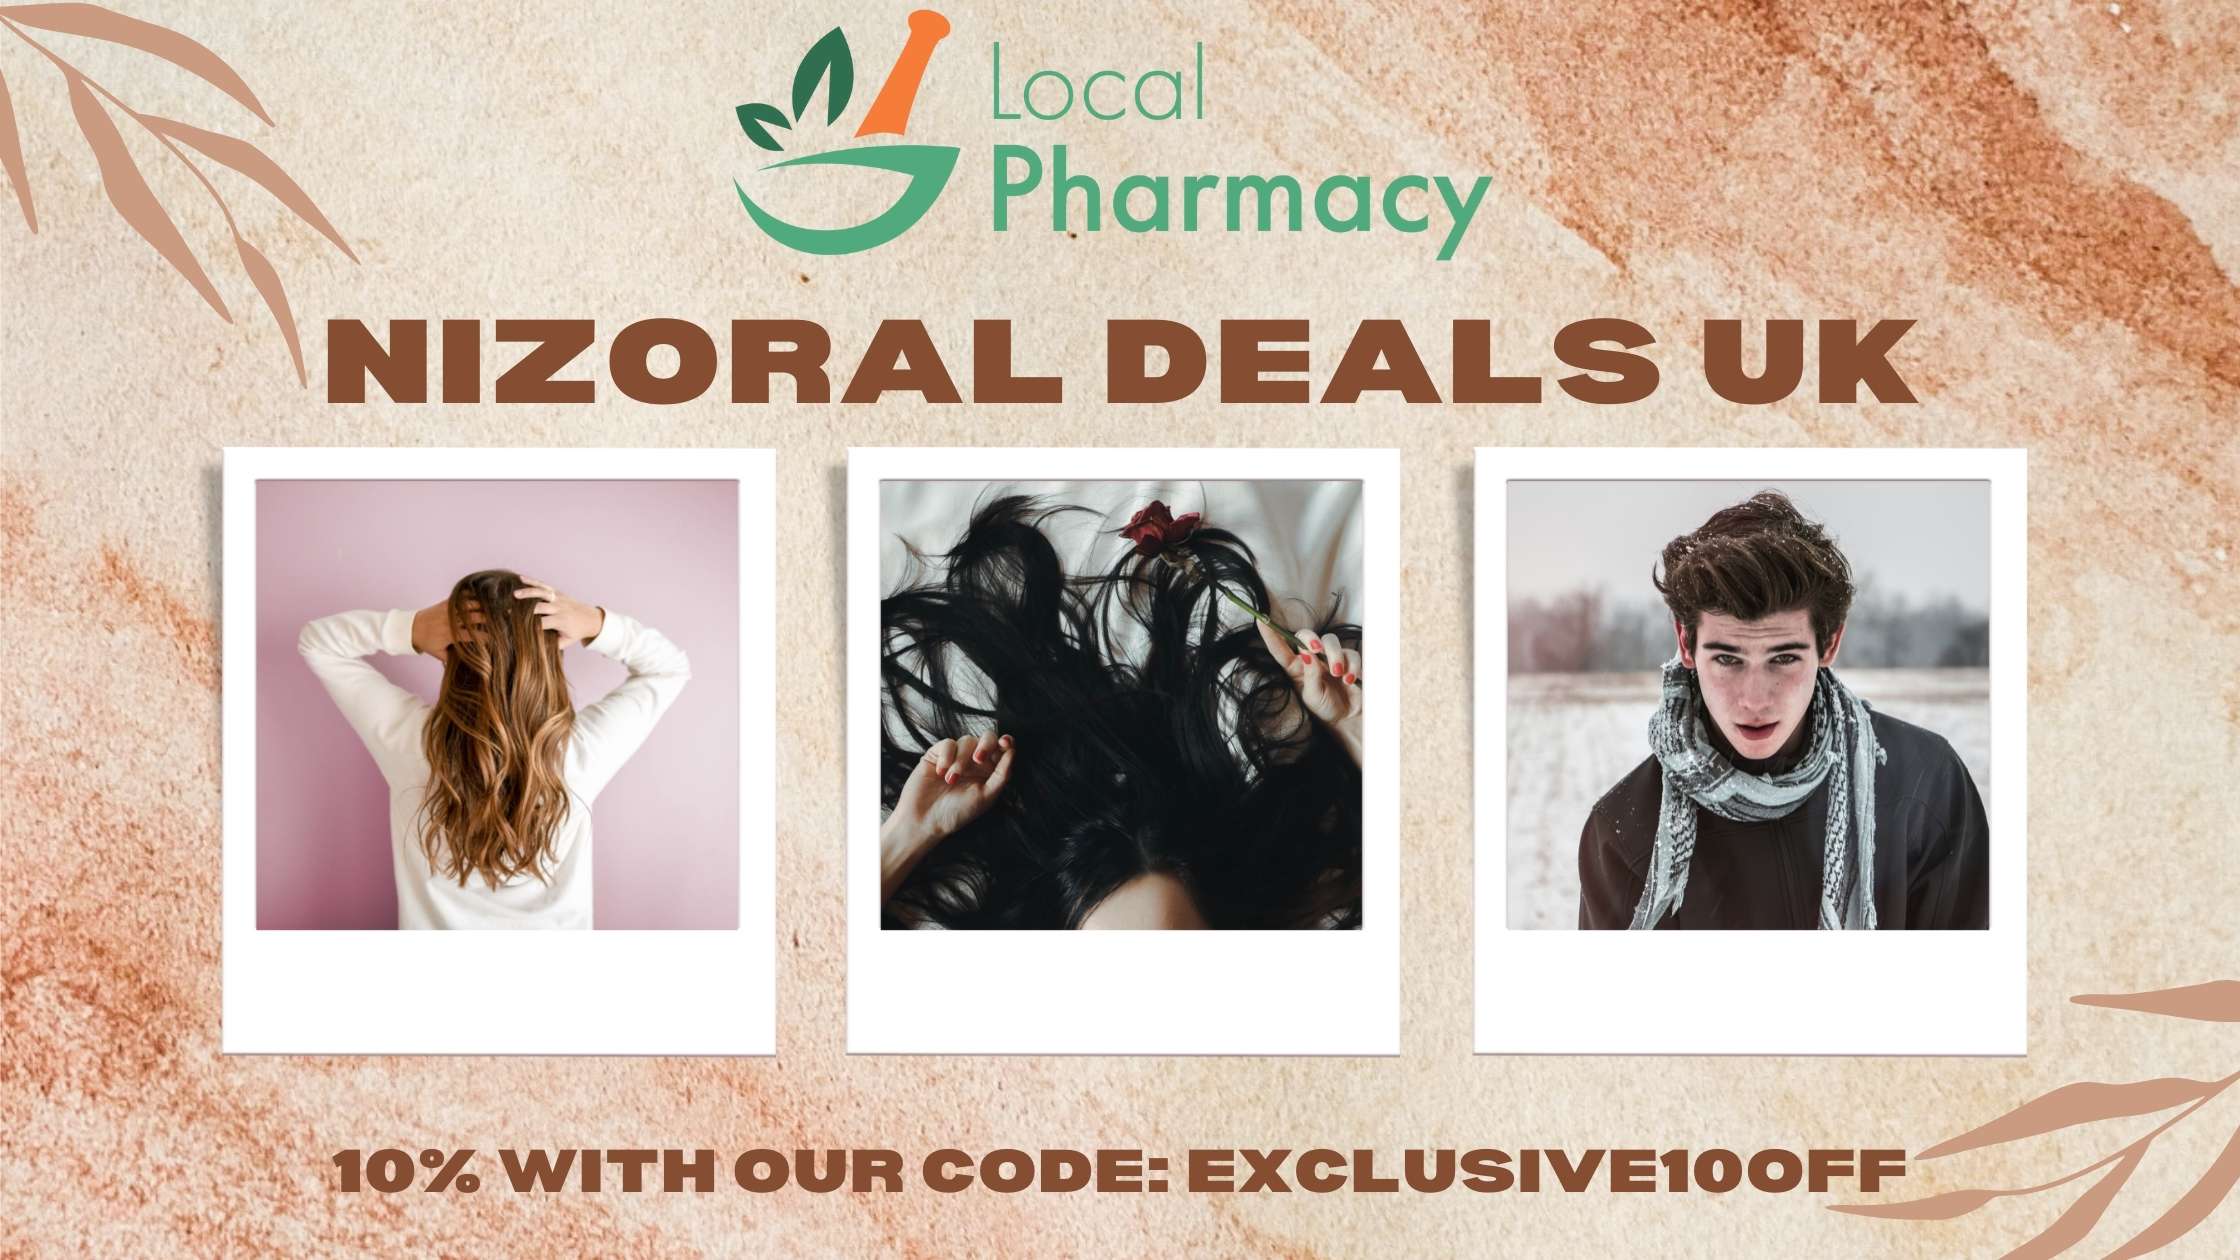 Nizoral coupon code and deals uk